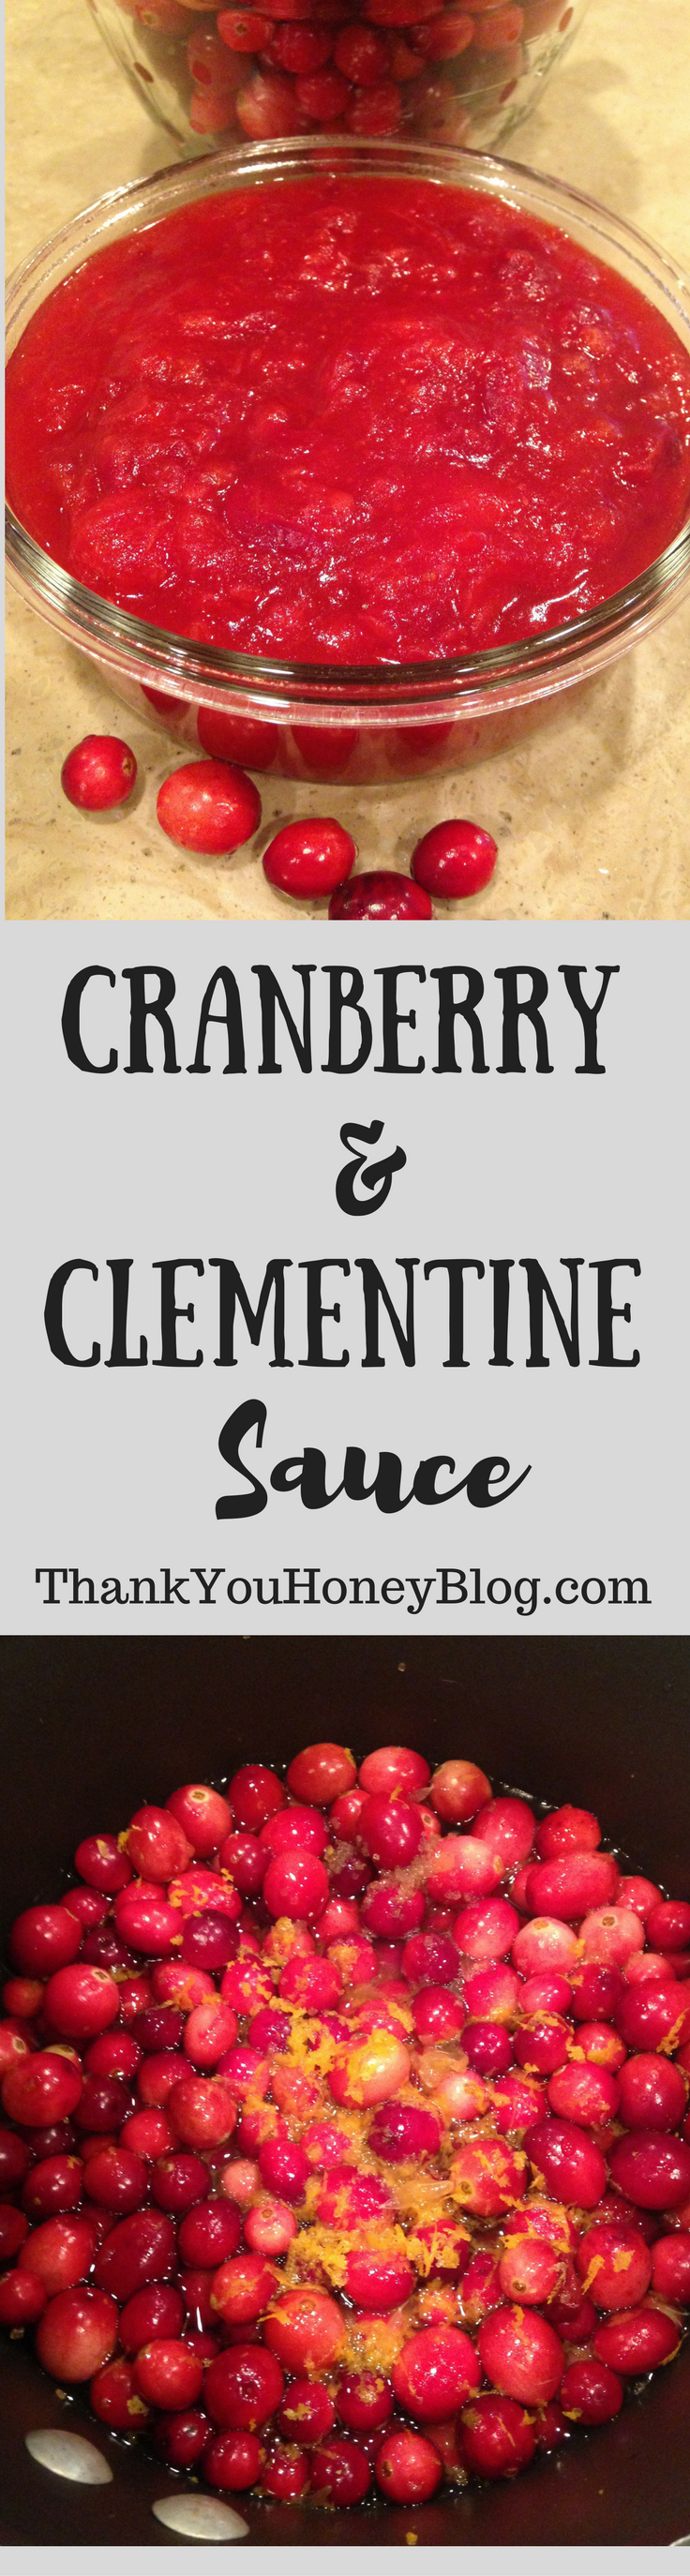 Cranberry & Clementine Sauce